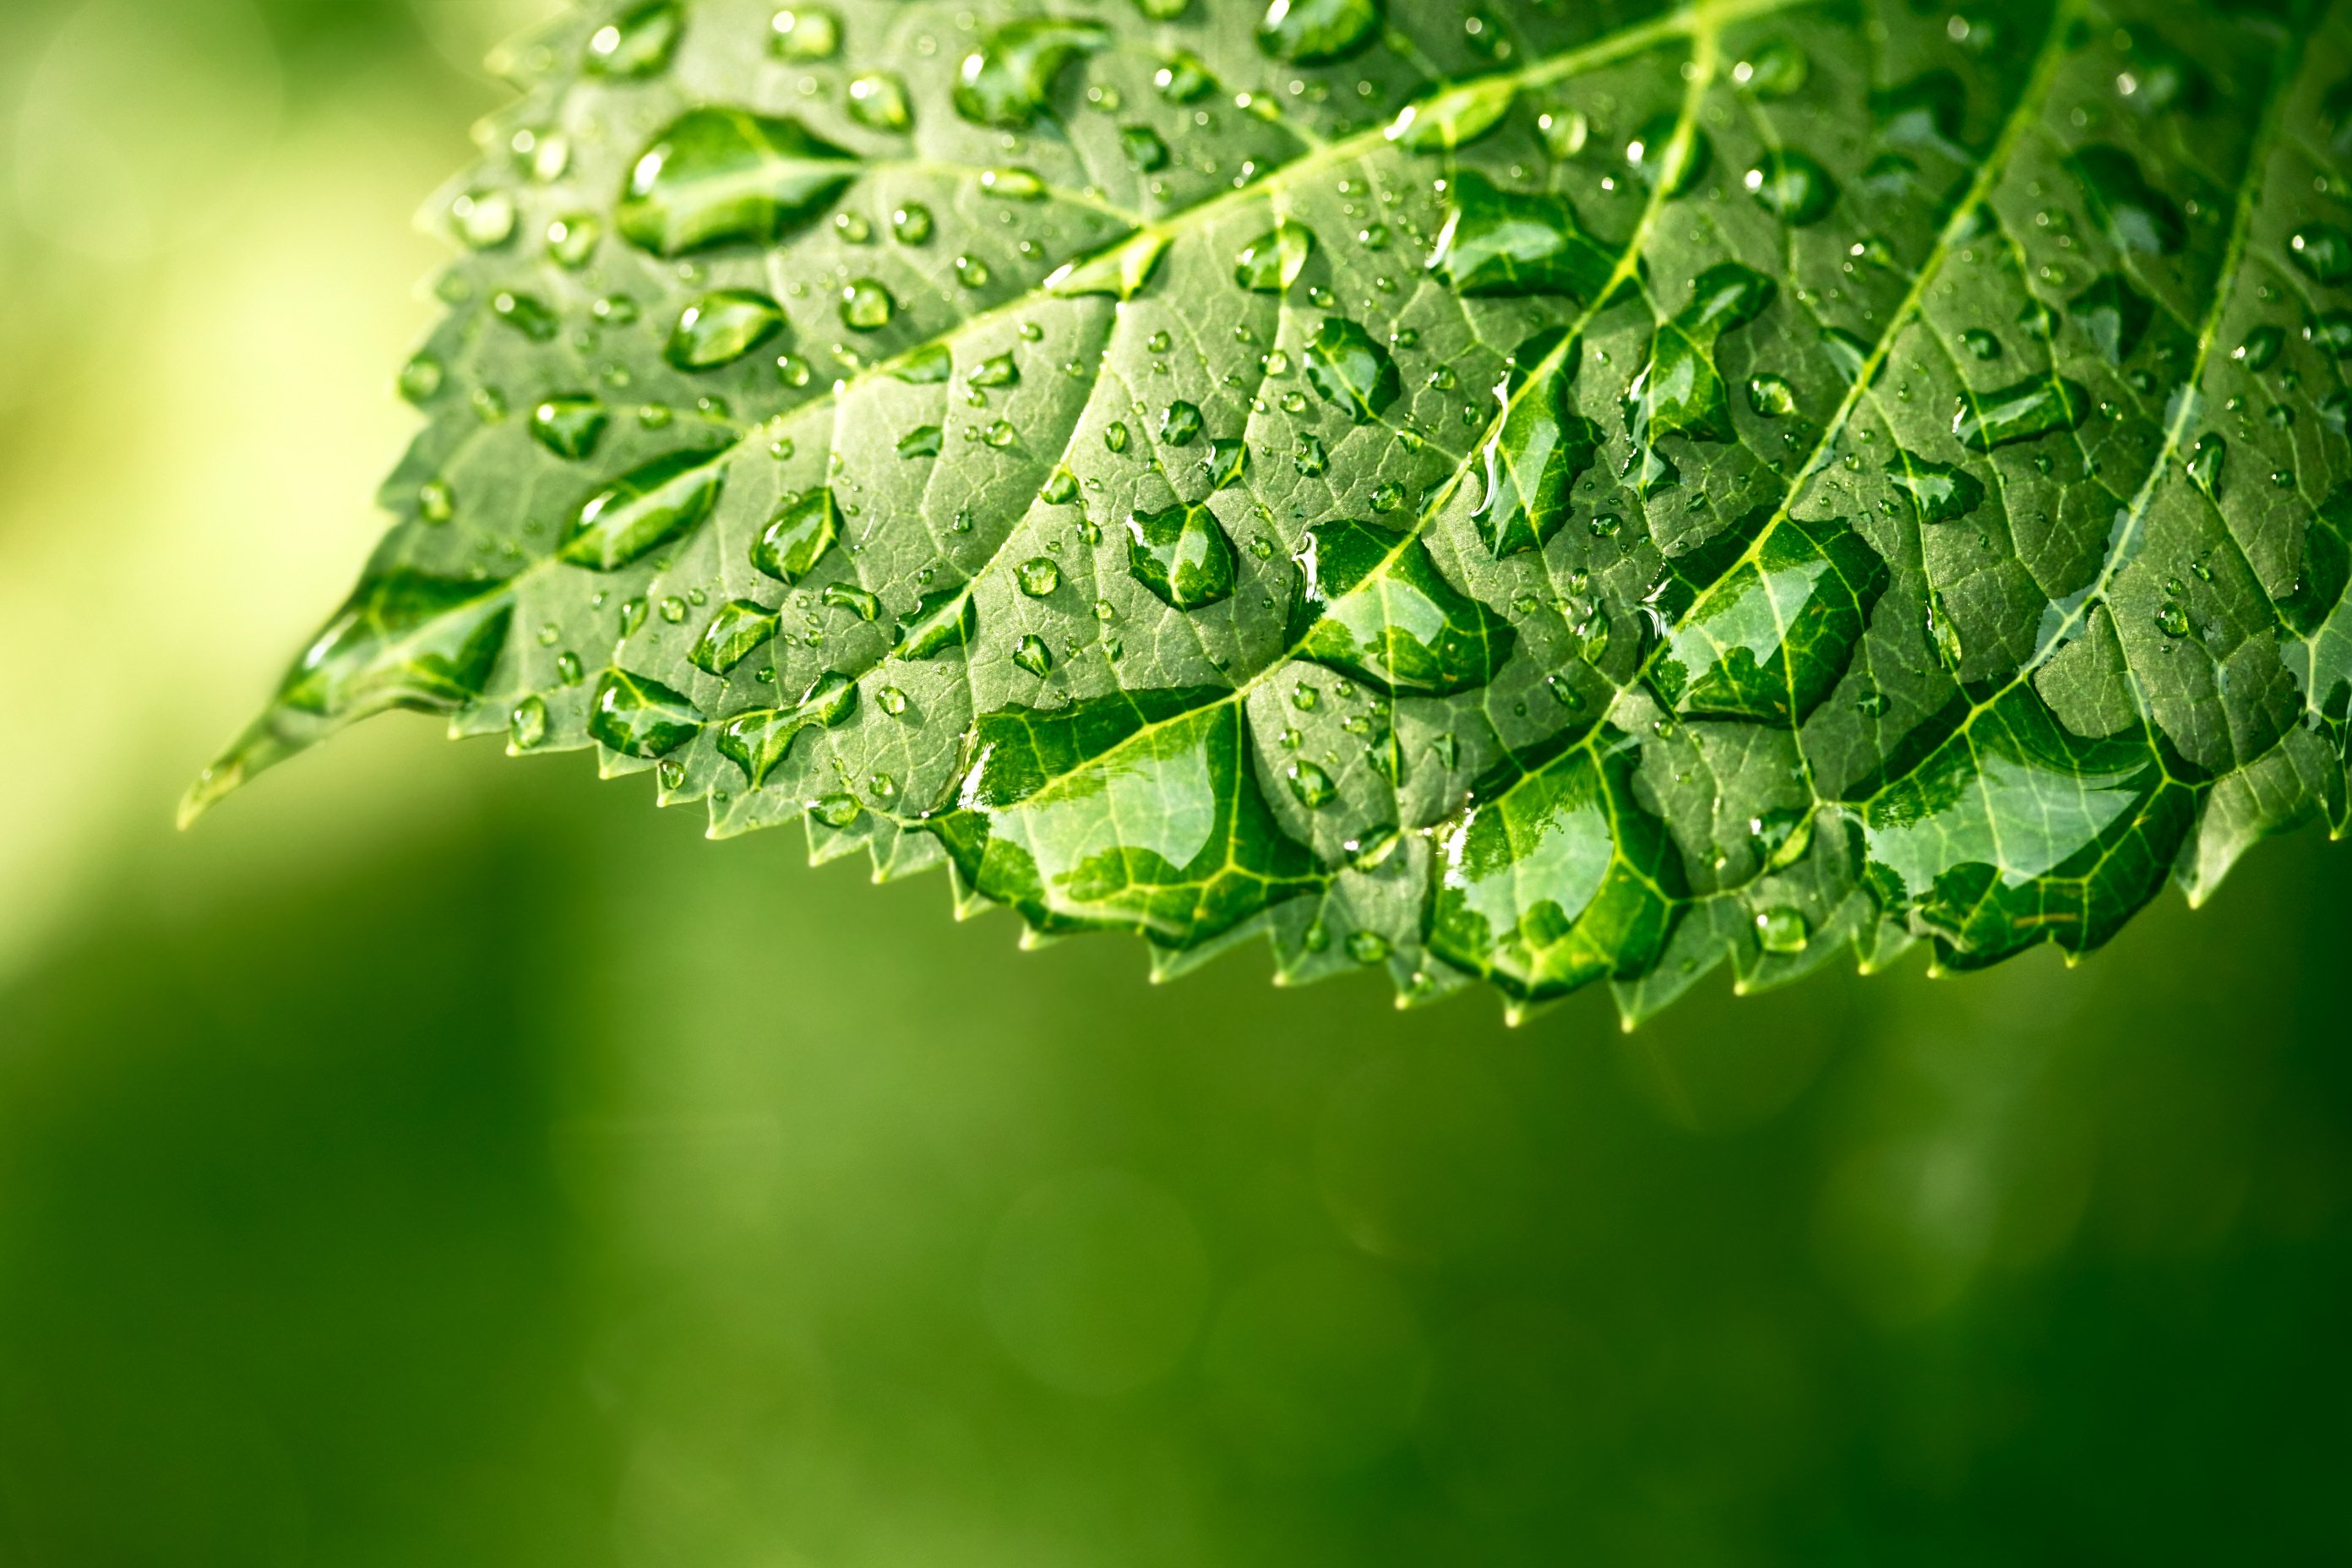 Glycerin water droplets on leaf